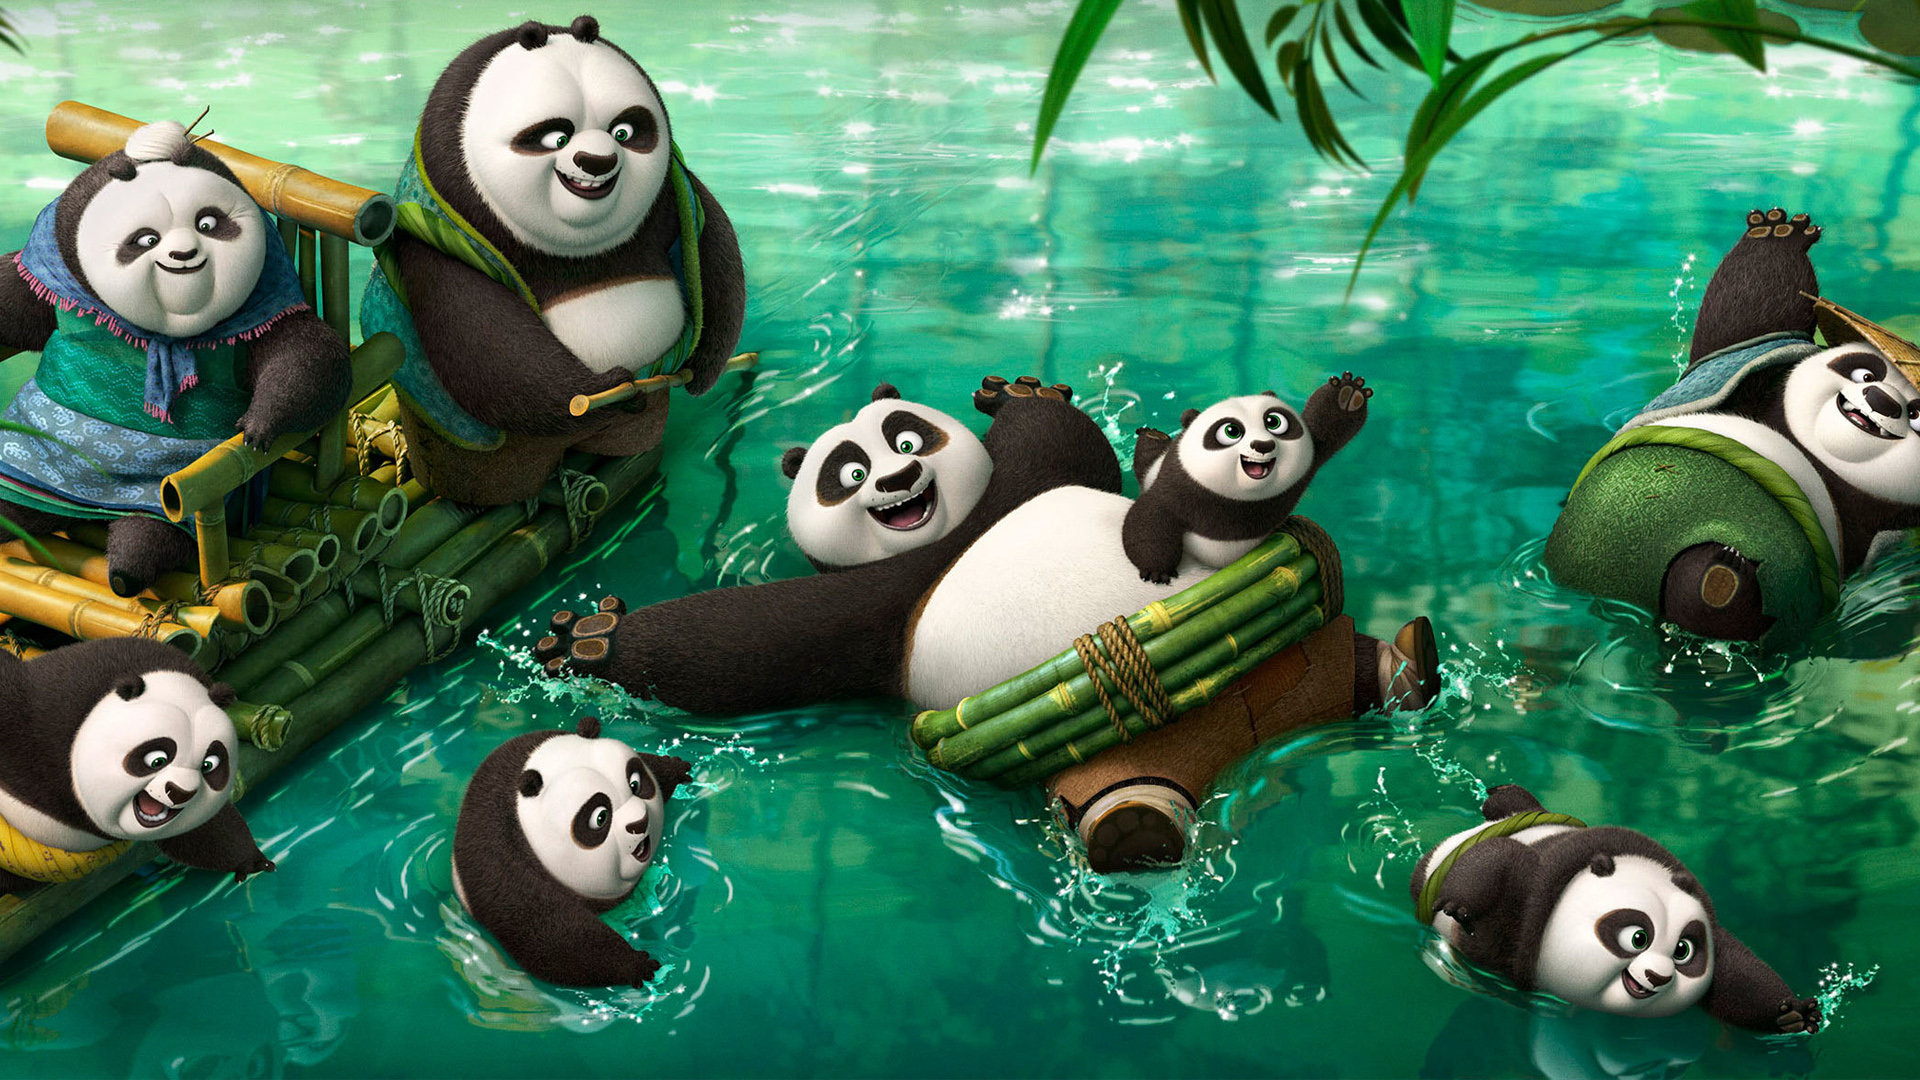 Best Kung Fu Panda 3 wallpaper ID:209016 for High Resolution full hd PC